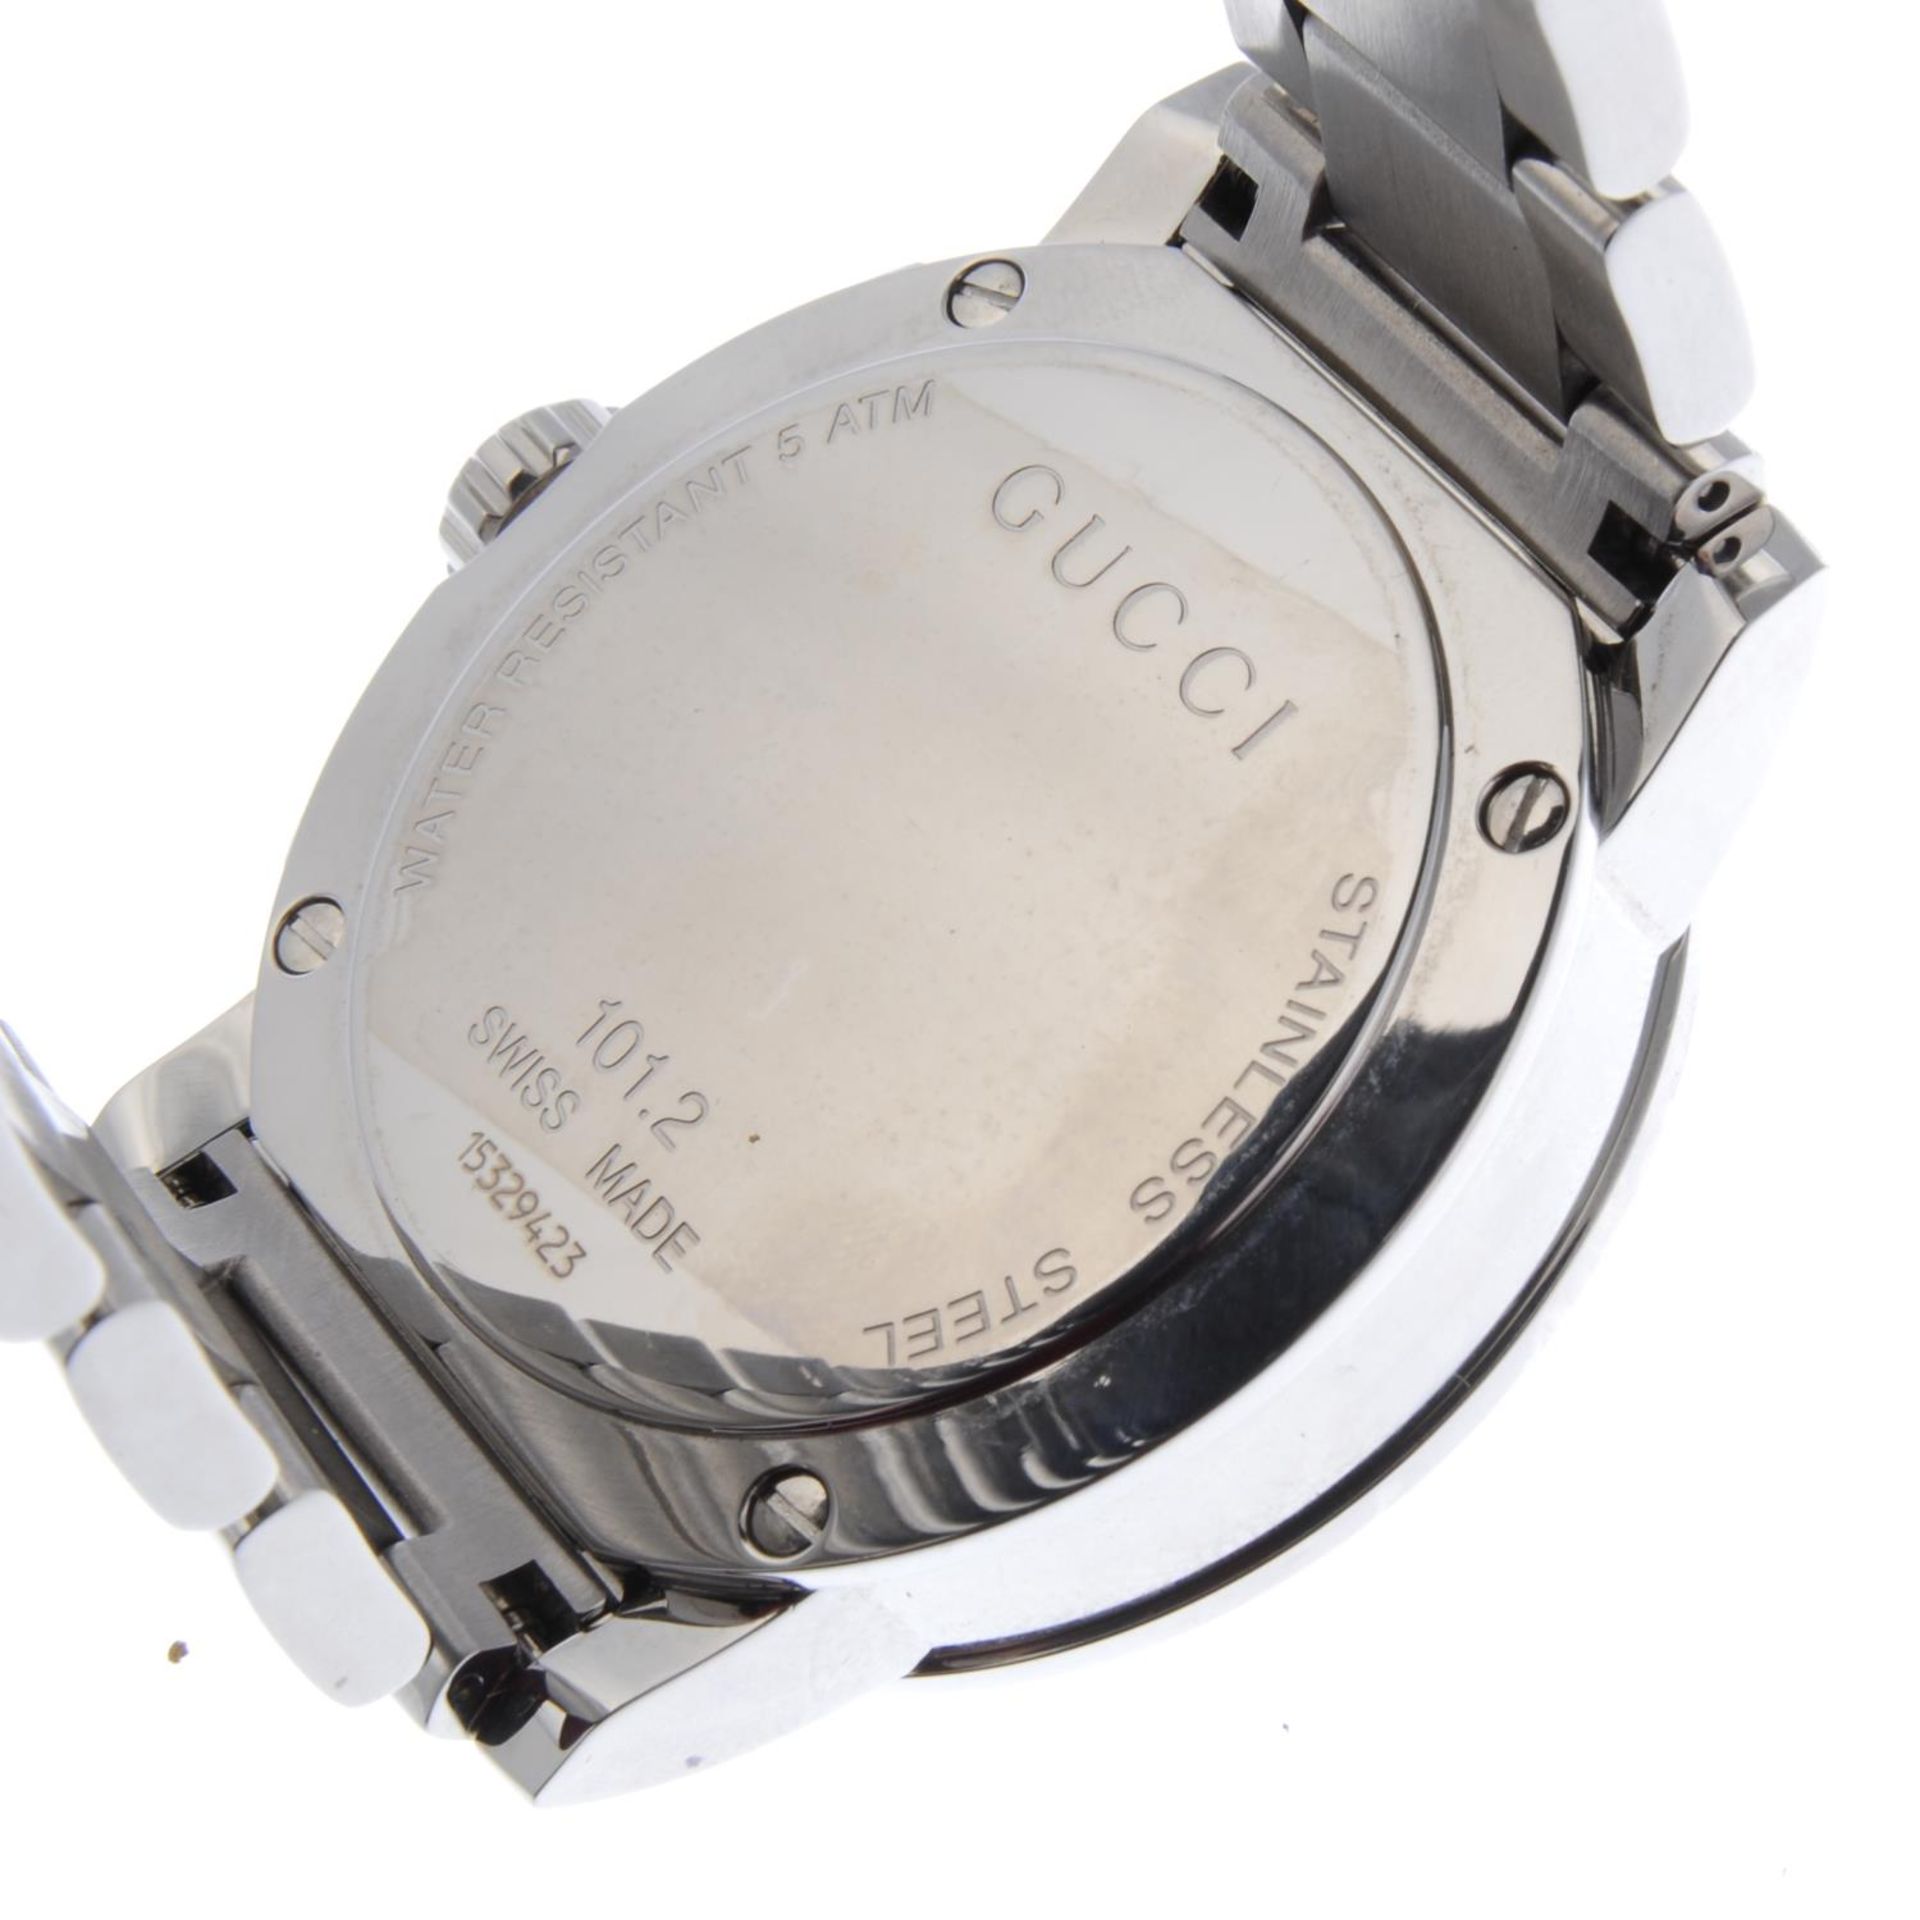 GUCCI - a gentleman's G-Chrono chronograph bracelet watch. - Image 4 of 4